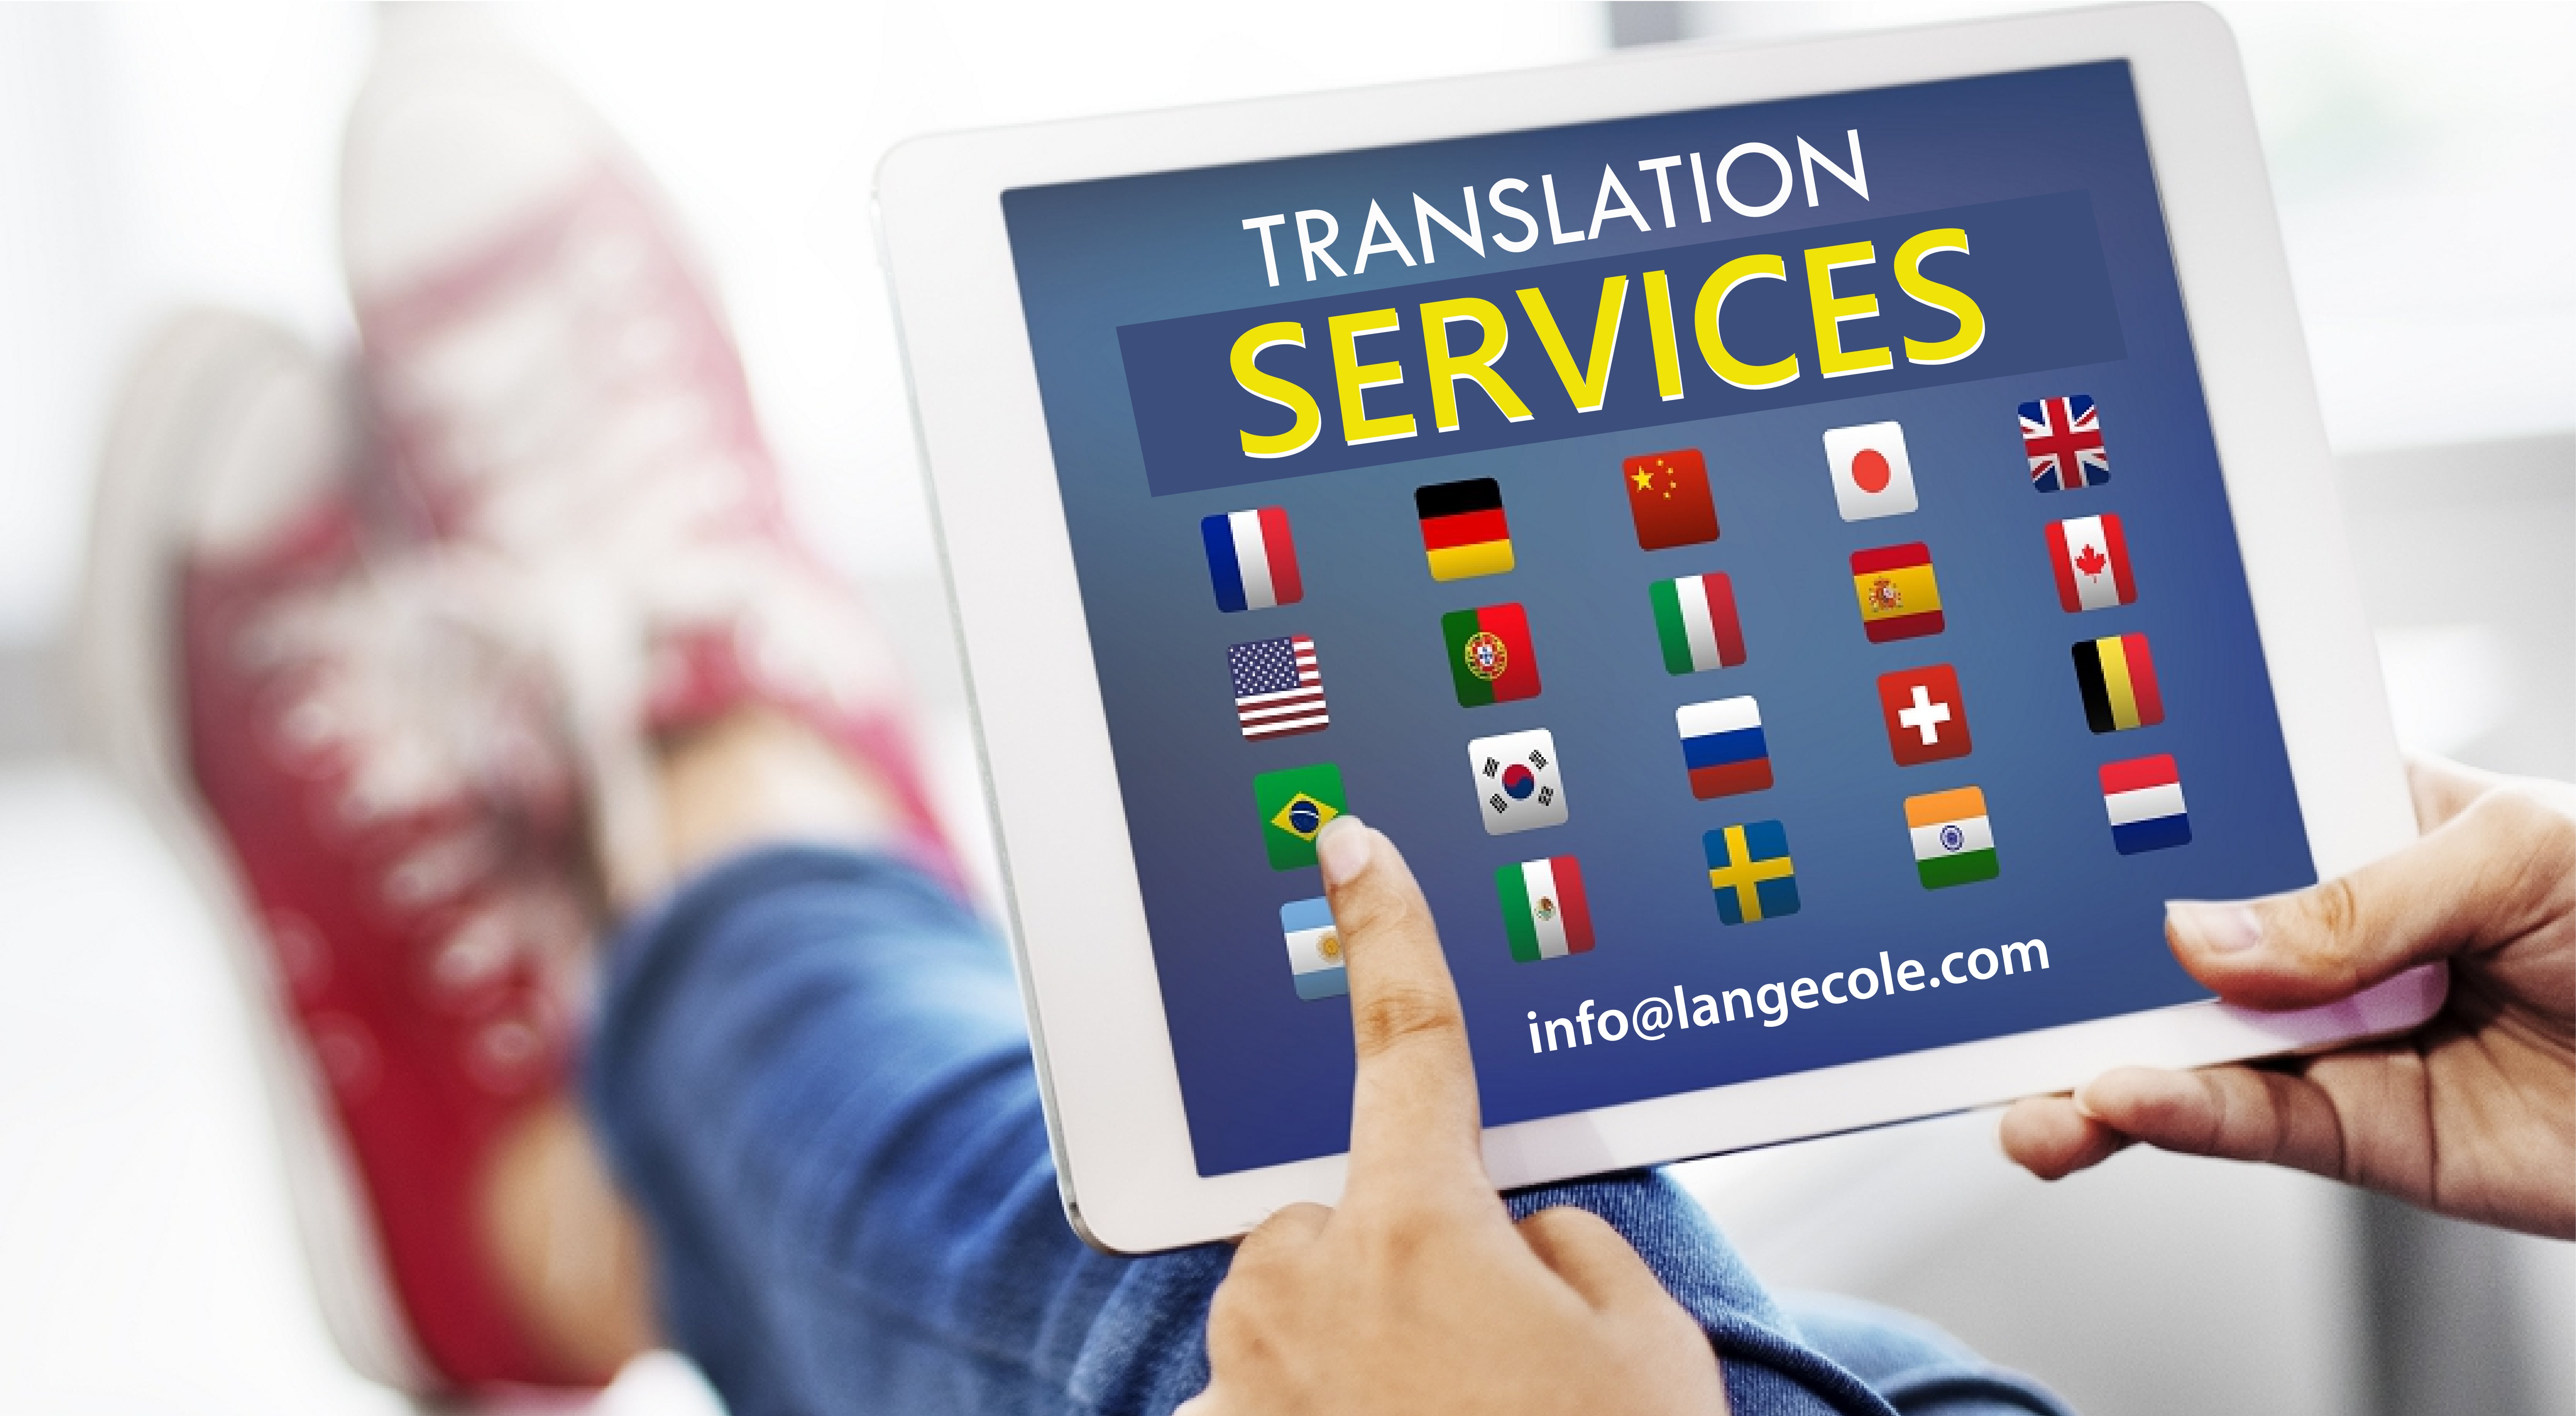 Translation services at langecole